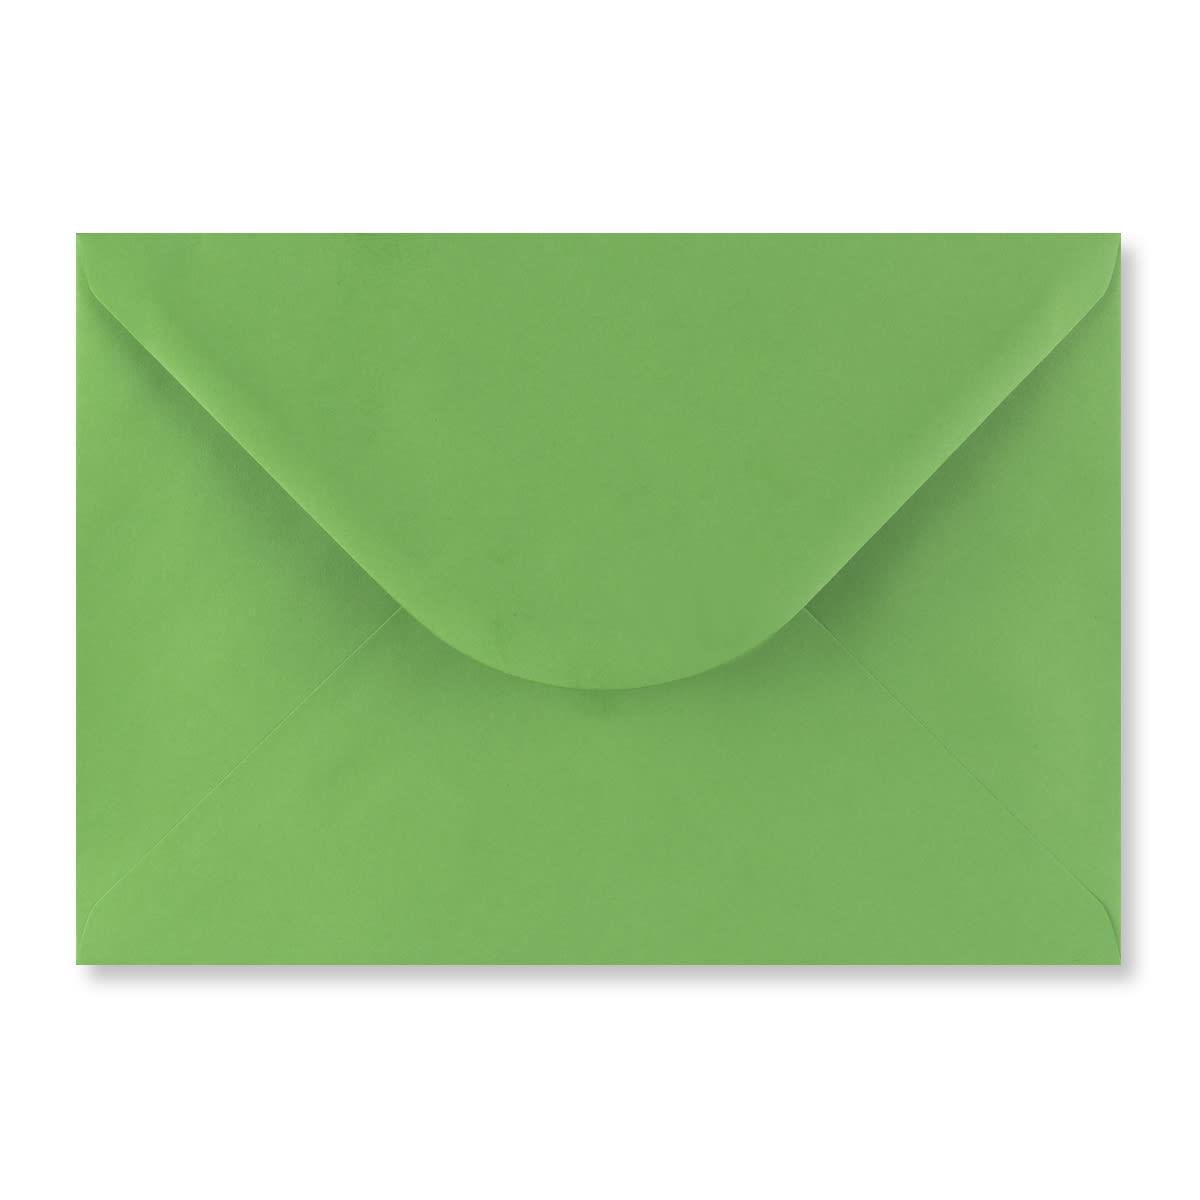 Fern Green 165 x 235mm Envelopes 100gsm